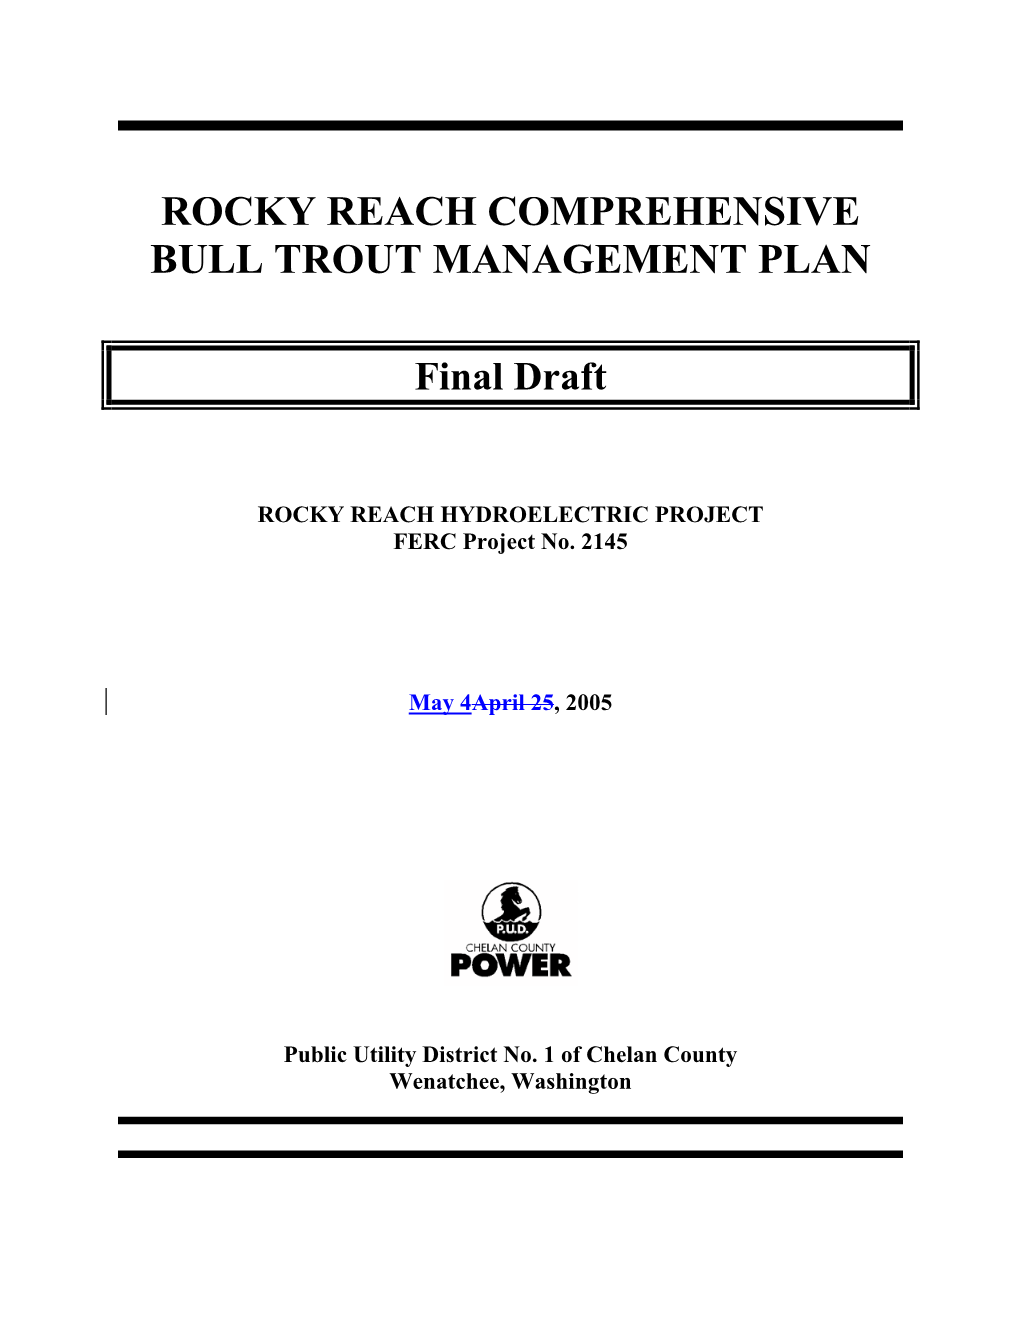 Rocky Reach Comprehensive Bull Trout Management Plan